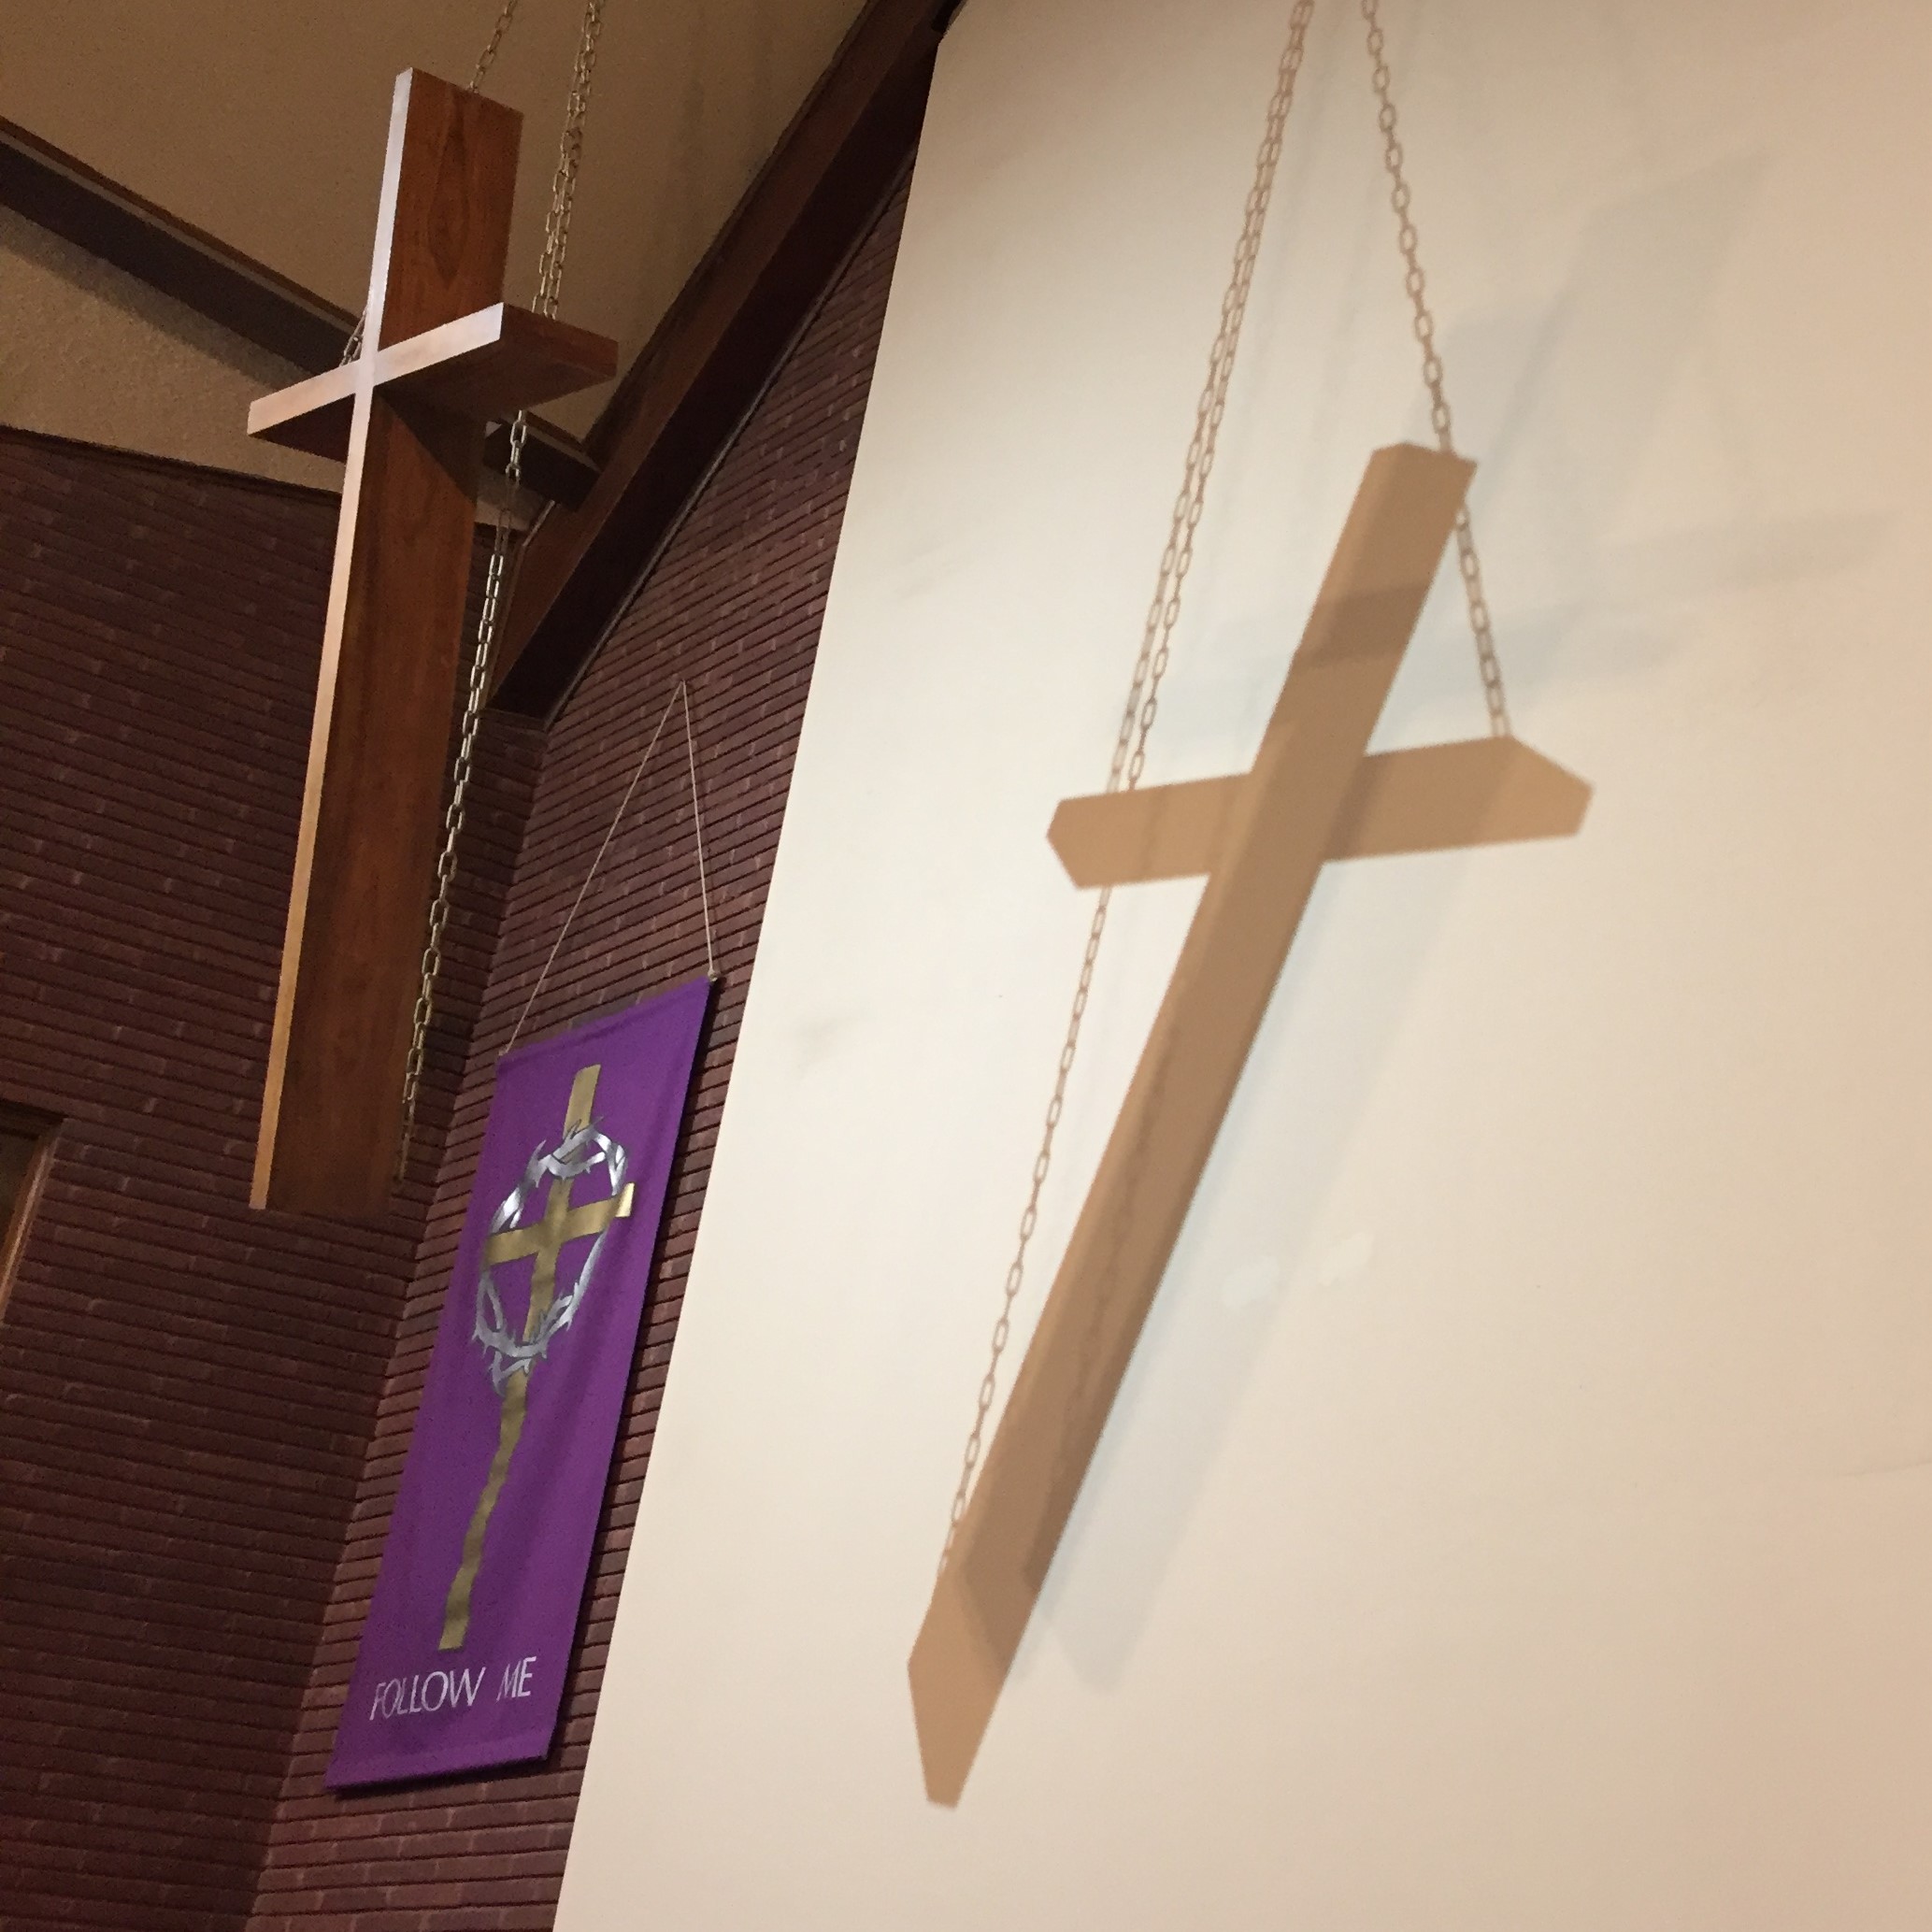 United Methodist Worship Service in the Shadow of the Lenten Cross - Midland TX